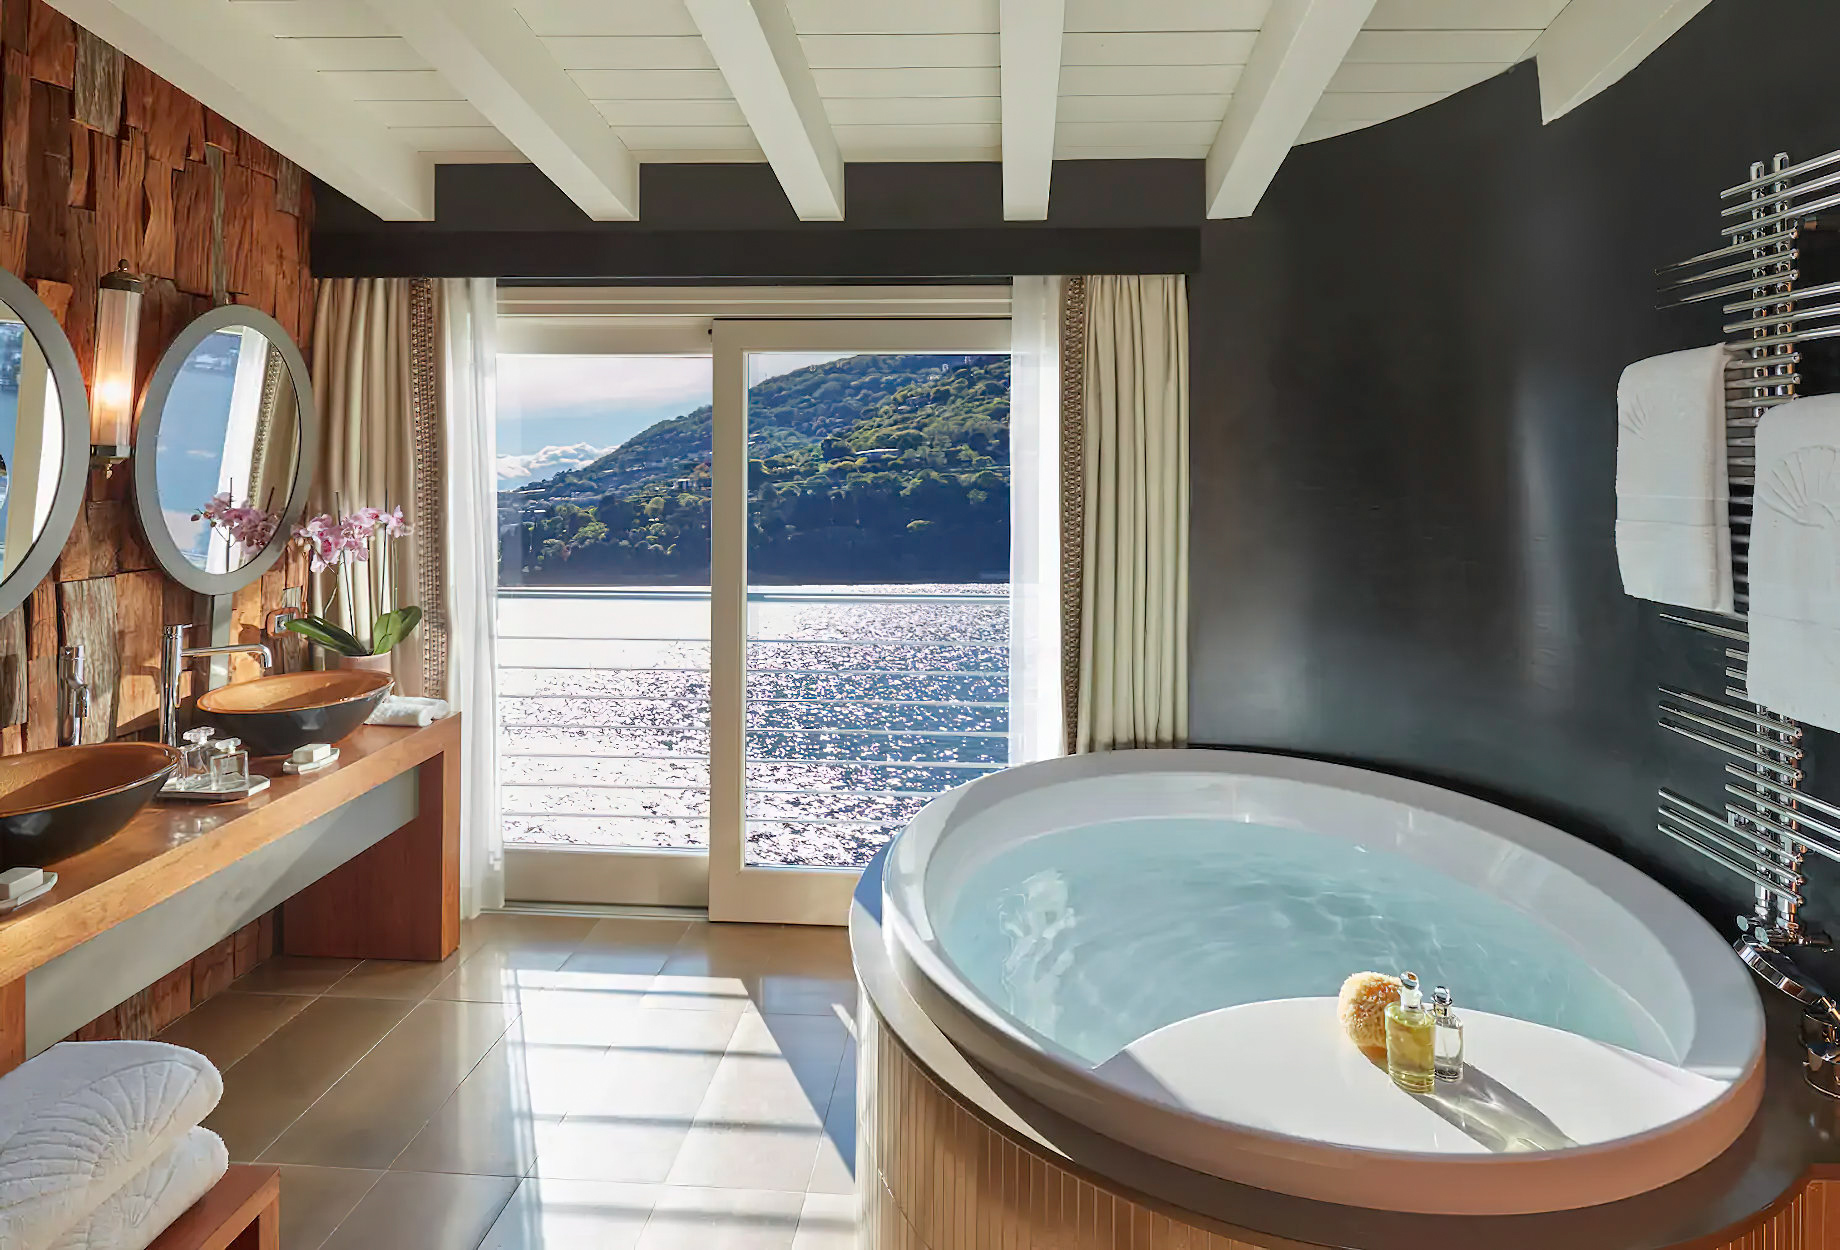 Mandarin Oriental, Lago di Como Hotel - Lake Como, Italy - Villa Della Rocca Bathroom